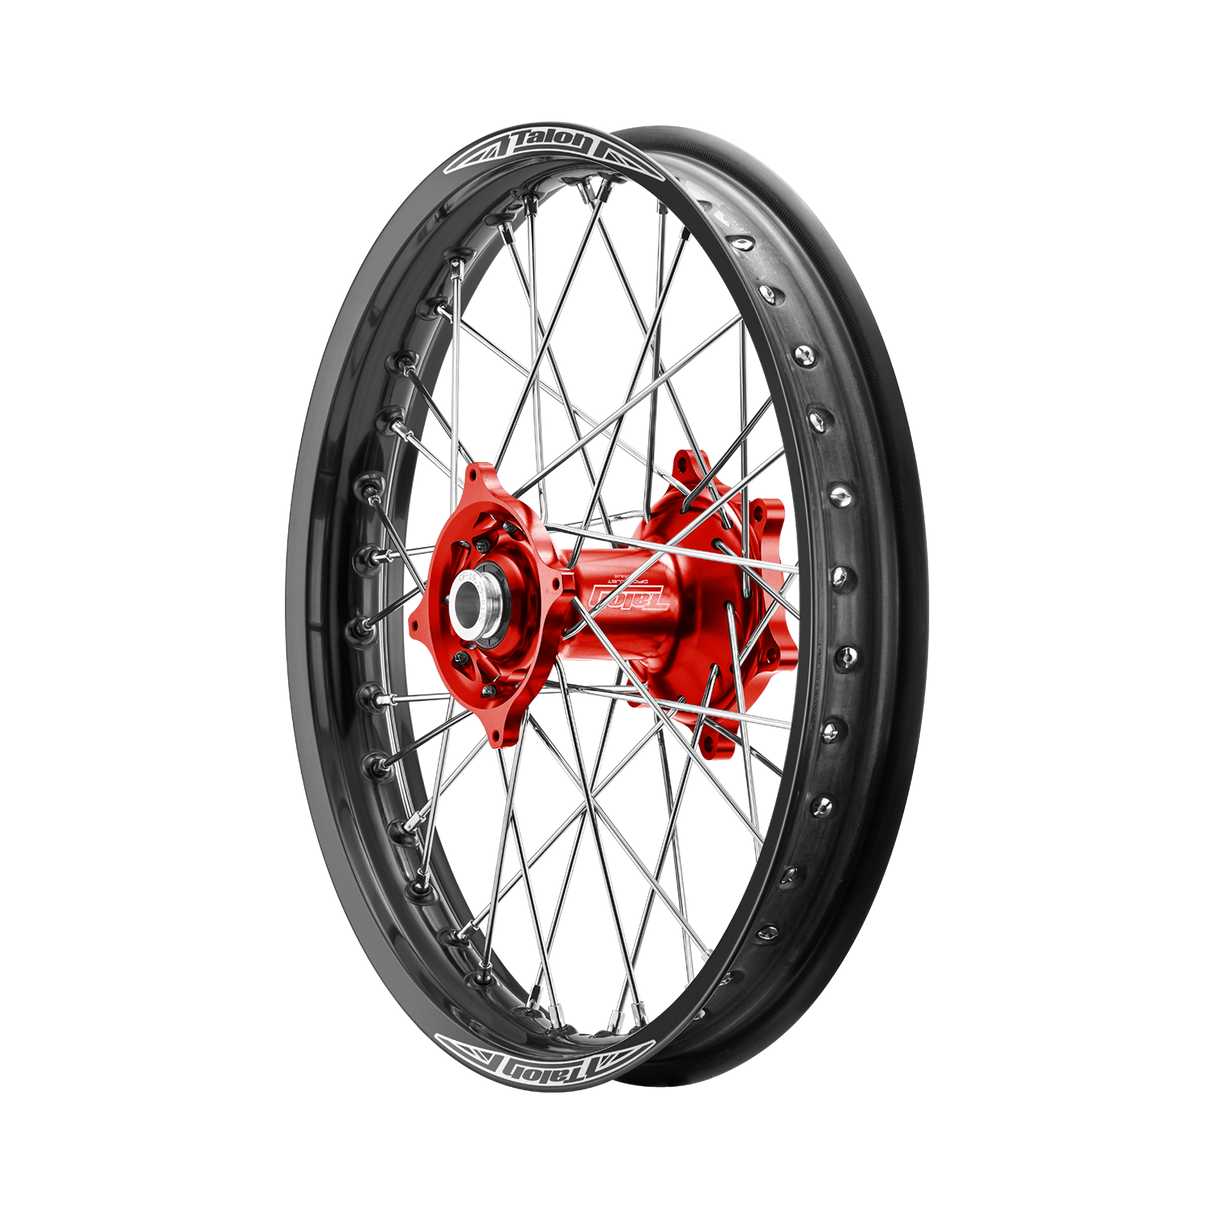 Talon 50cc Big Wheel Rear Wheel Black Rim - Red Hubs